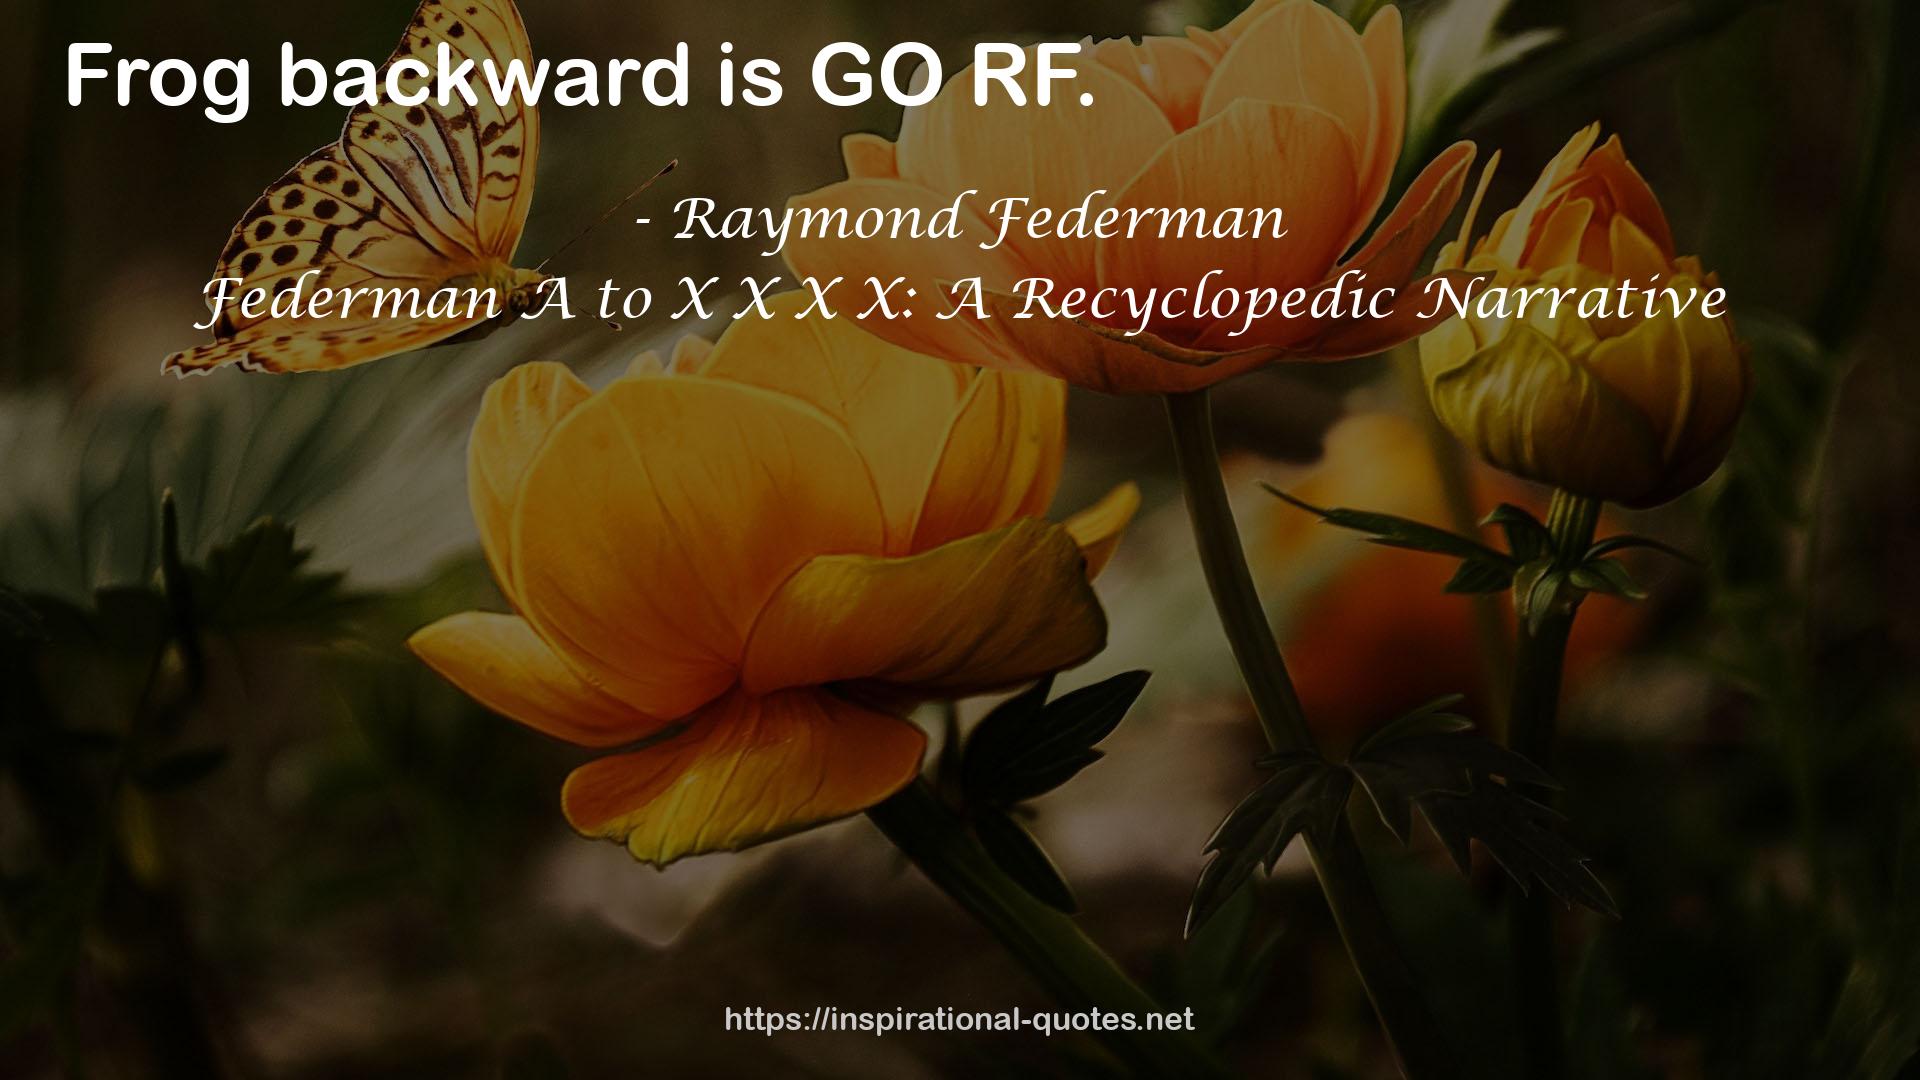 Federman A to X X X X: A Recyclopedic Narrative QUOTES